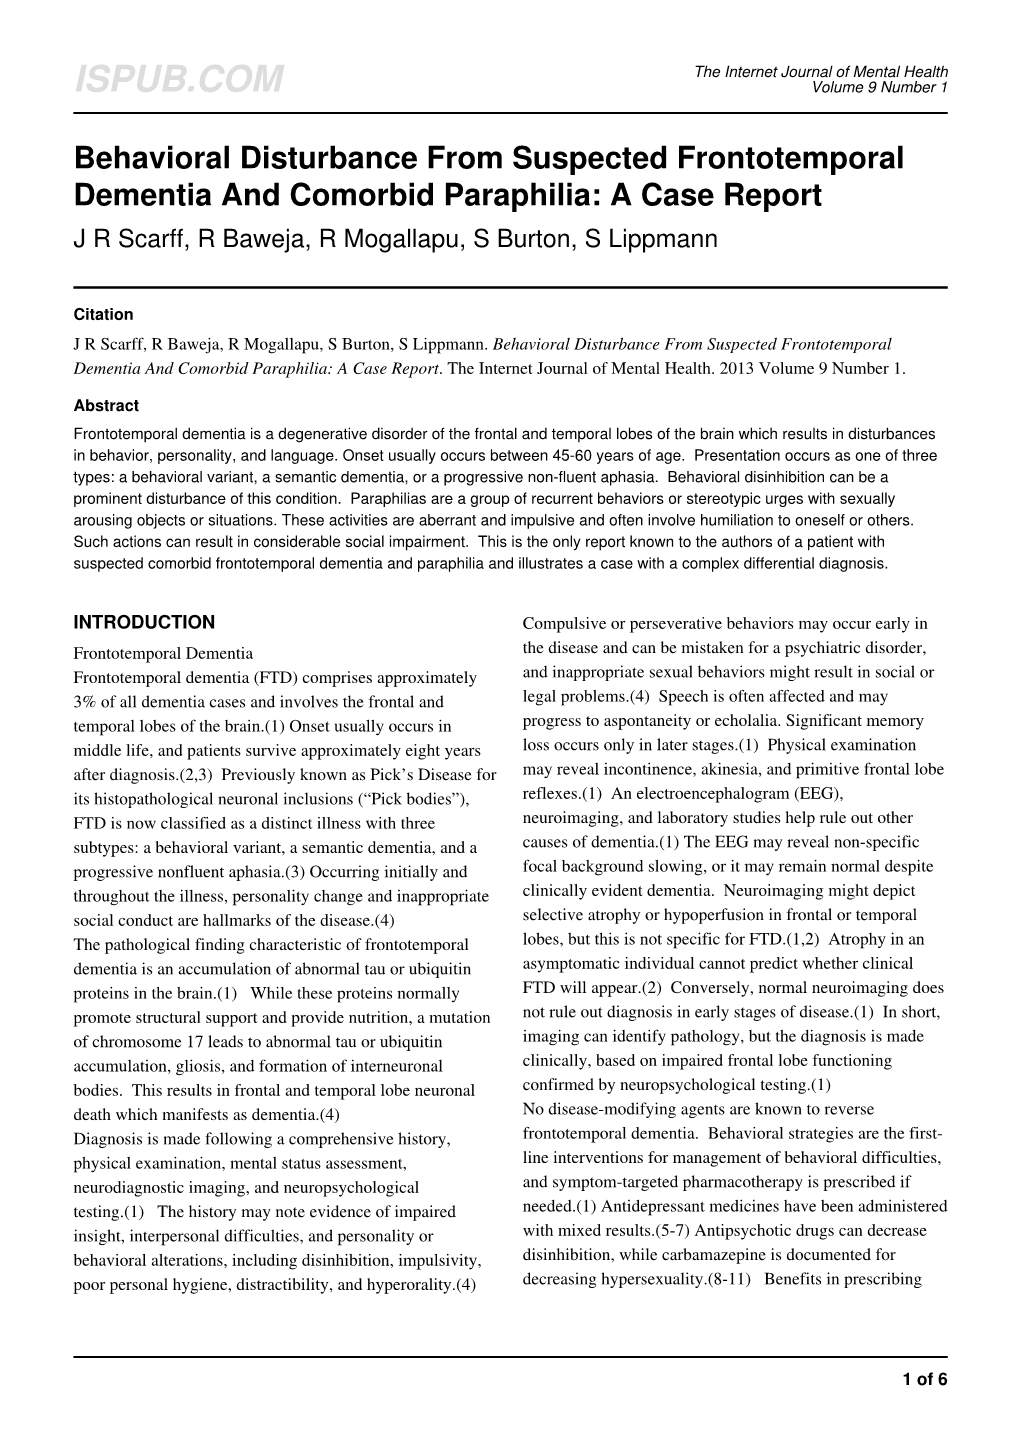 Behavioral Disturbance from Suspected Frontotemporal Dementia and Comorbid Paraphilia: a Case Report J R Scarff, R Baweja, R Mogallapu, S Burton, S Lippmann